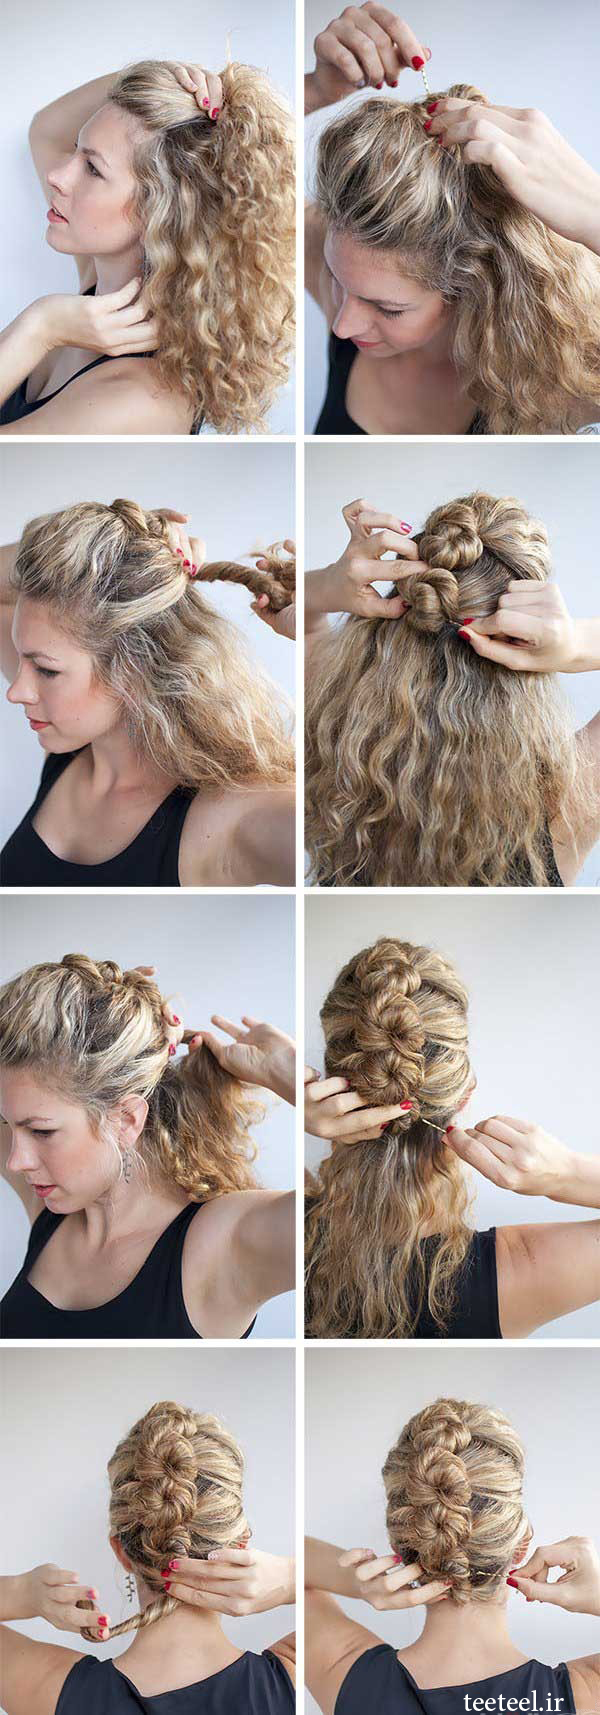 hair1 - آموزش مدل موی پیچ فرانسوی